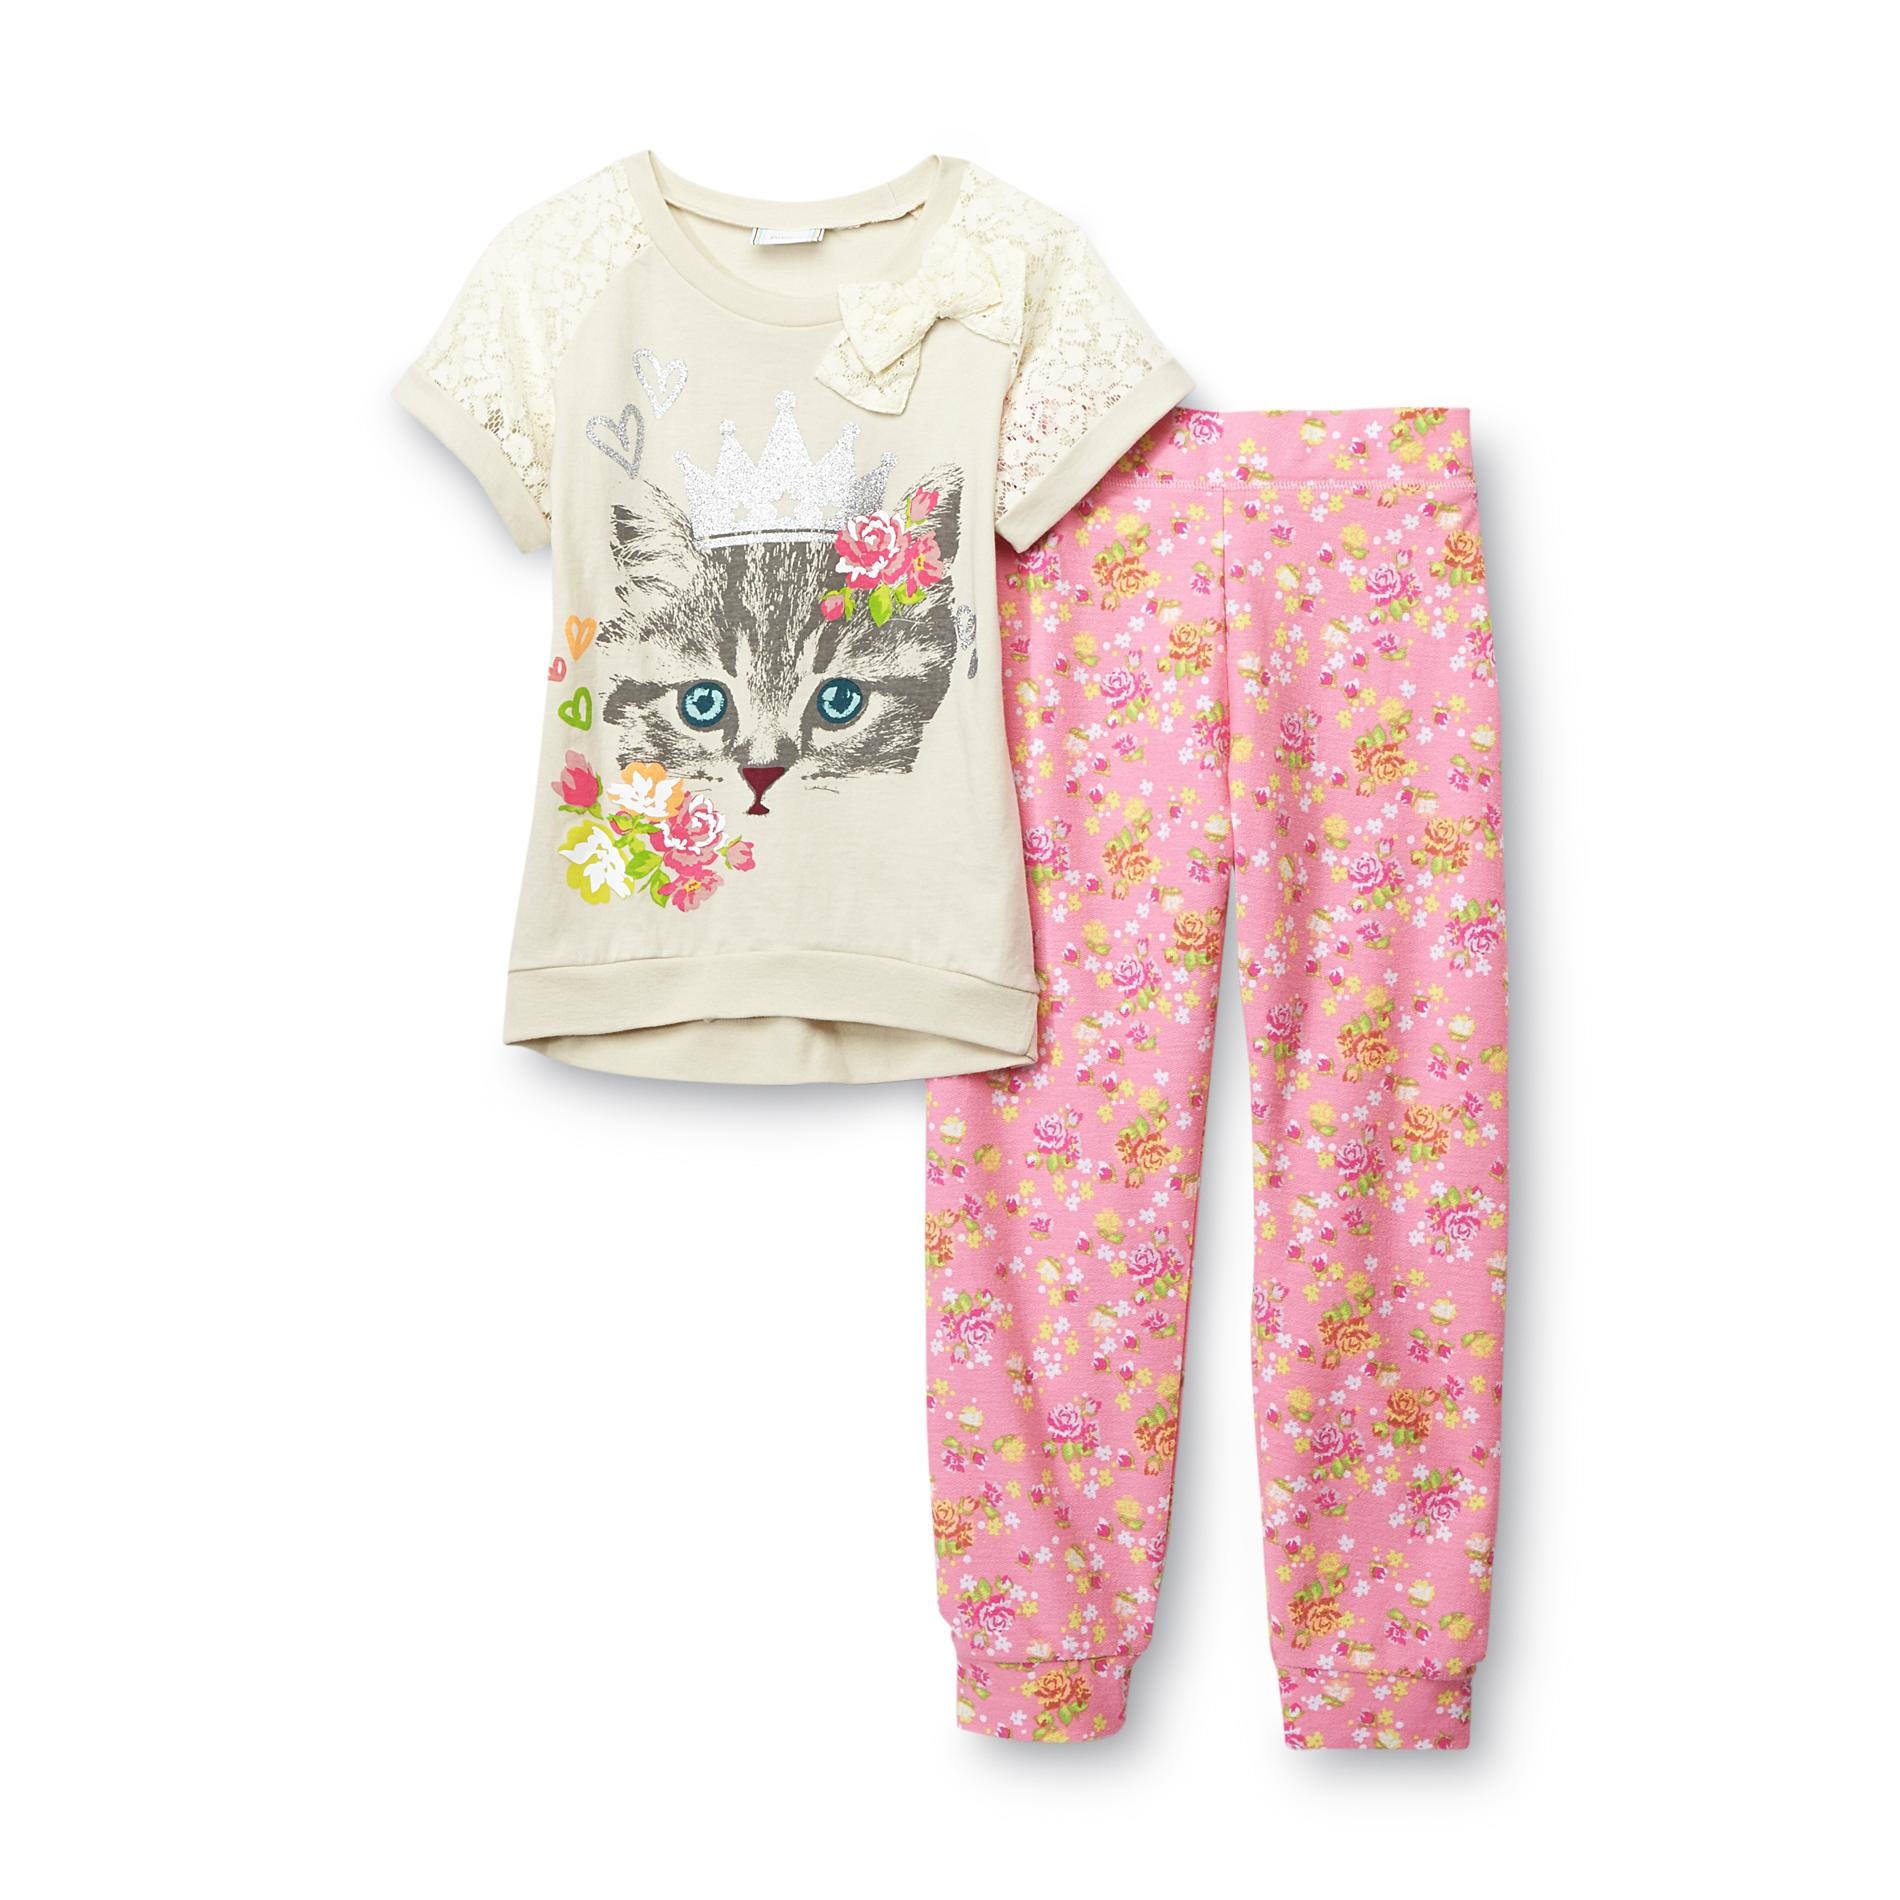 Piper Girl's Graphic Top & Sweatpants - Cat